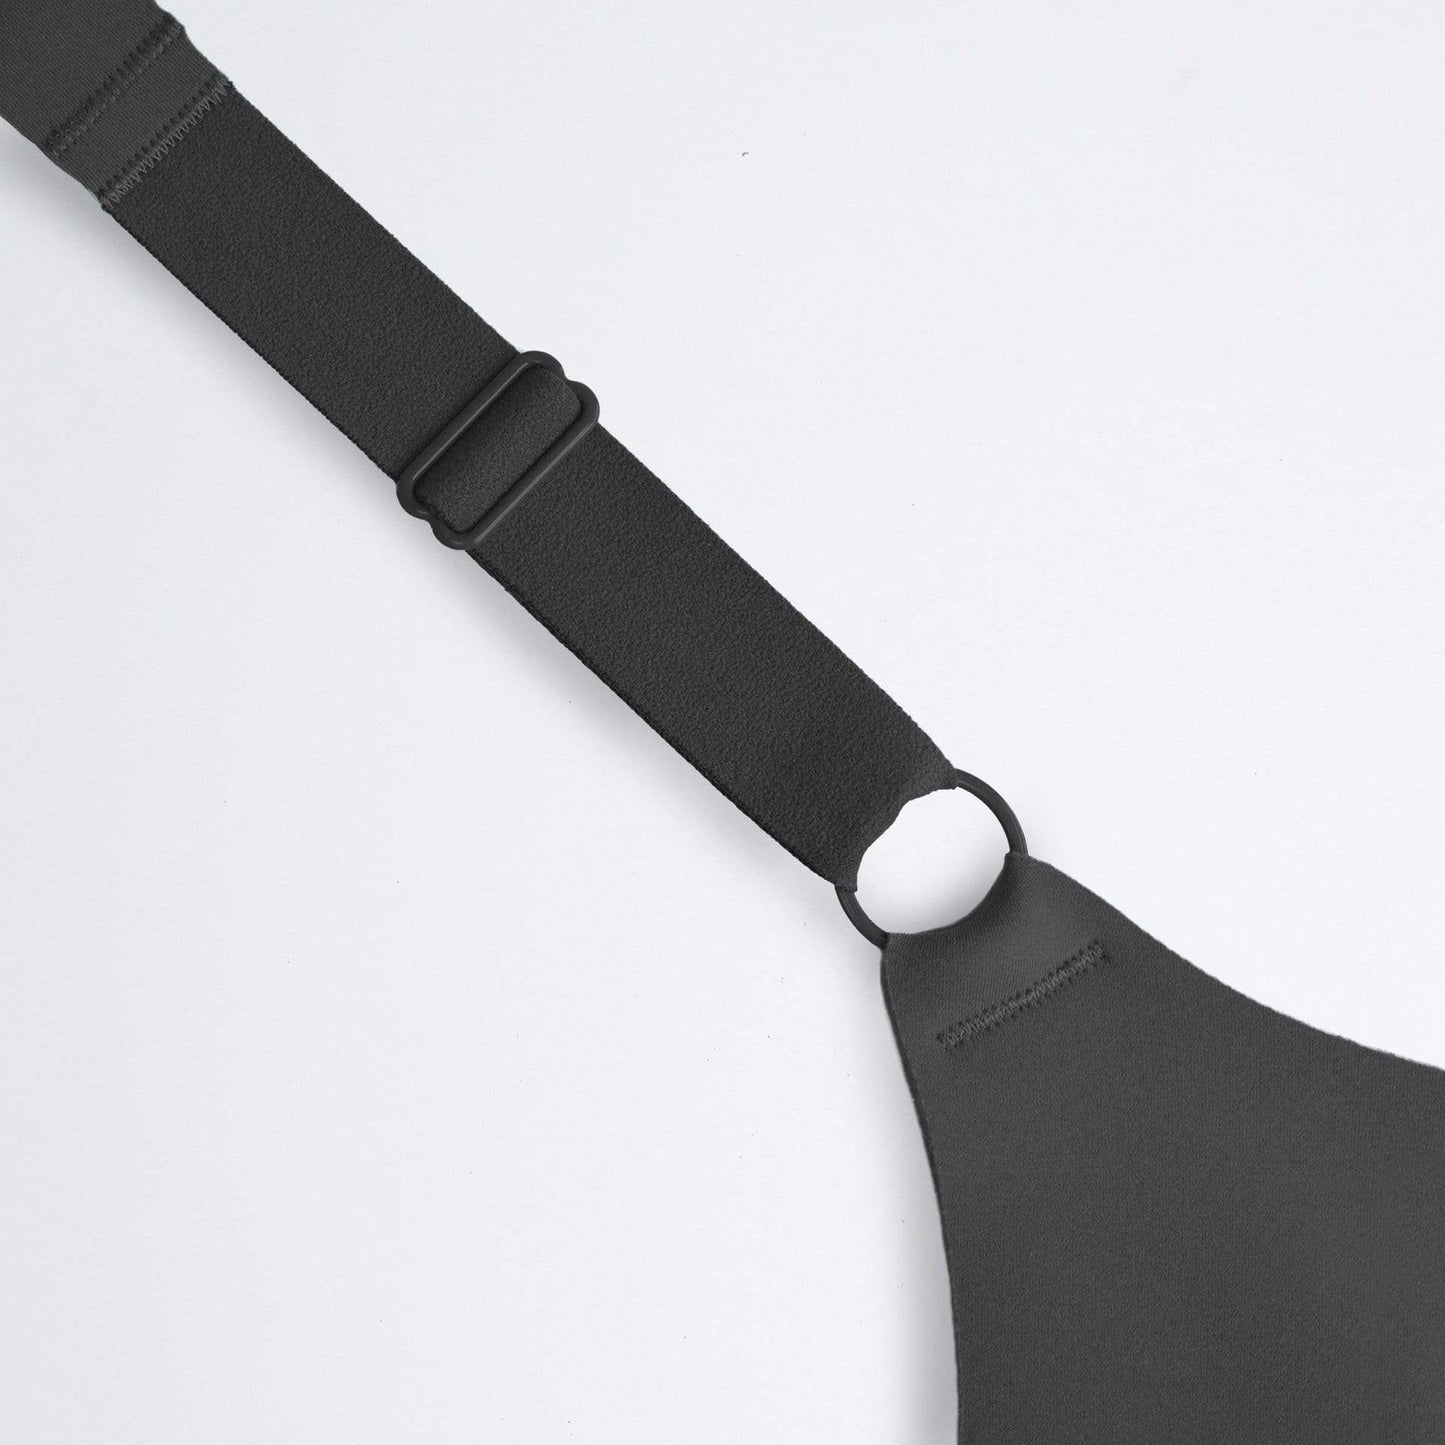 Beyond Bra - Onyx, product image of strap hardware close up